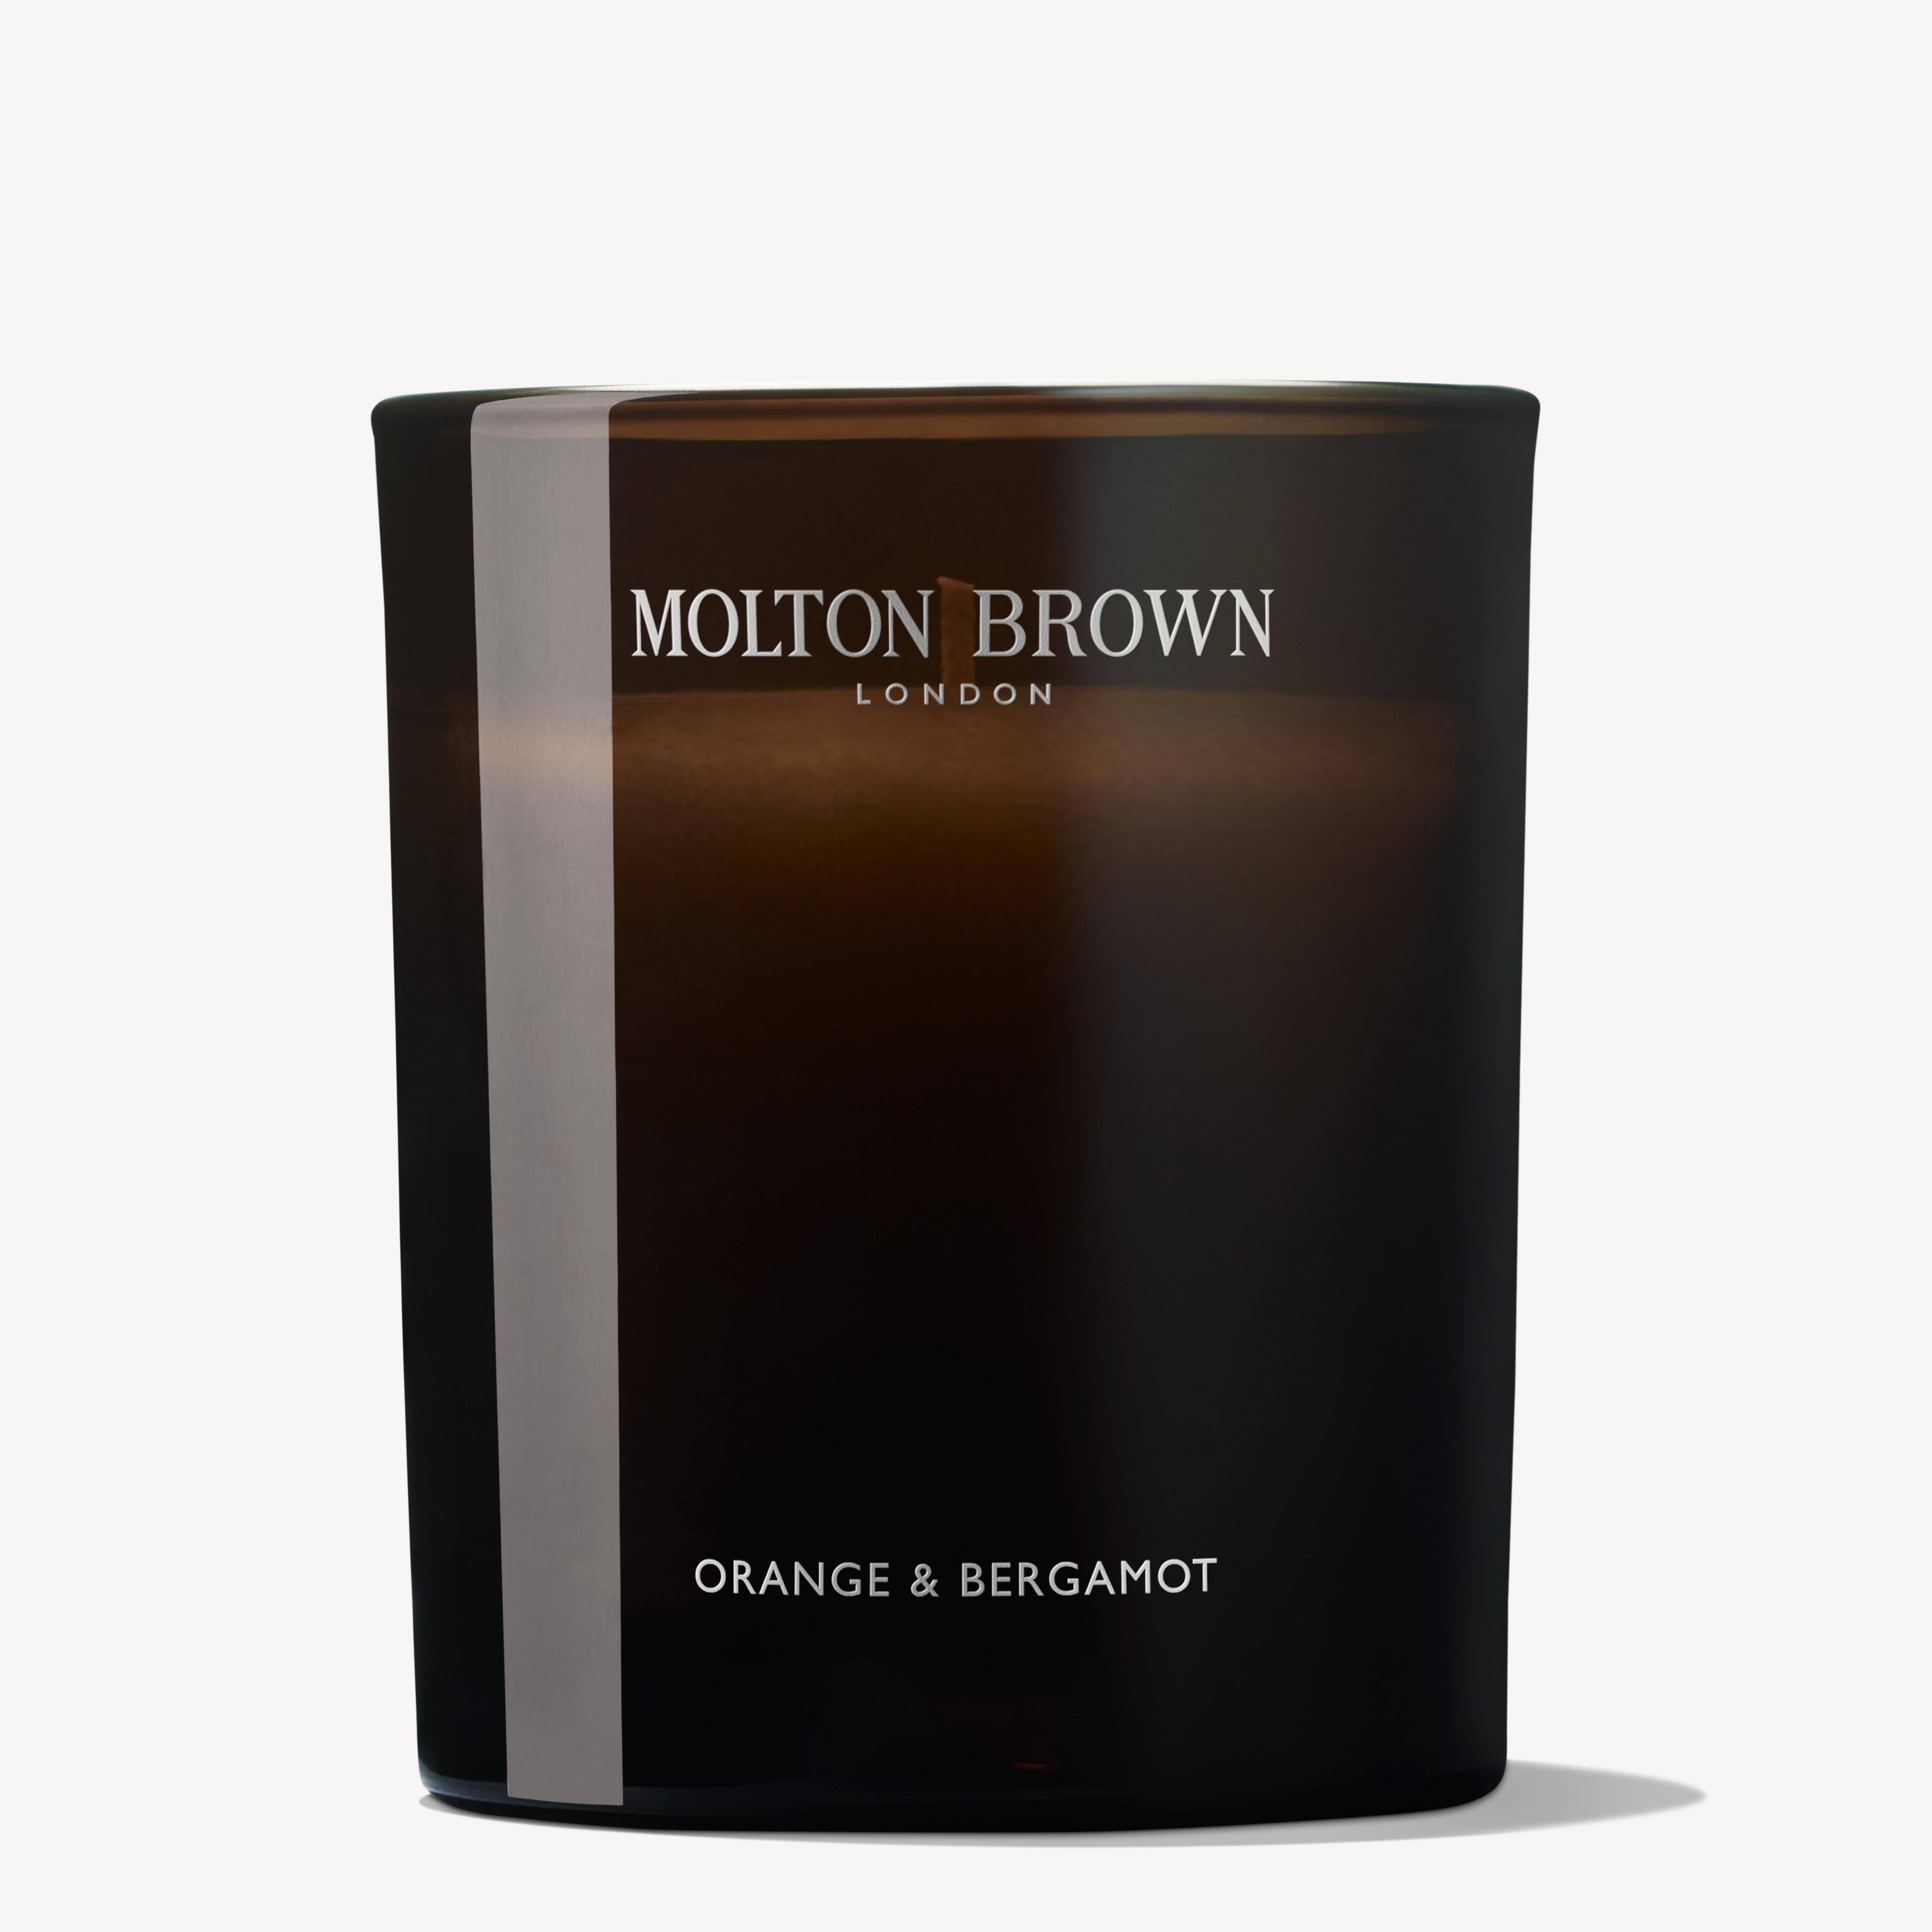 Molton Brown Fiery Pink Pepper Eau de Parfum Travel Case Refill 0.25fl oz